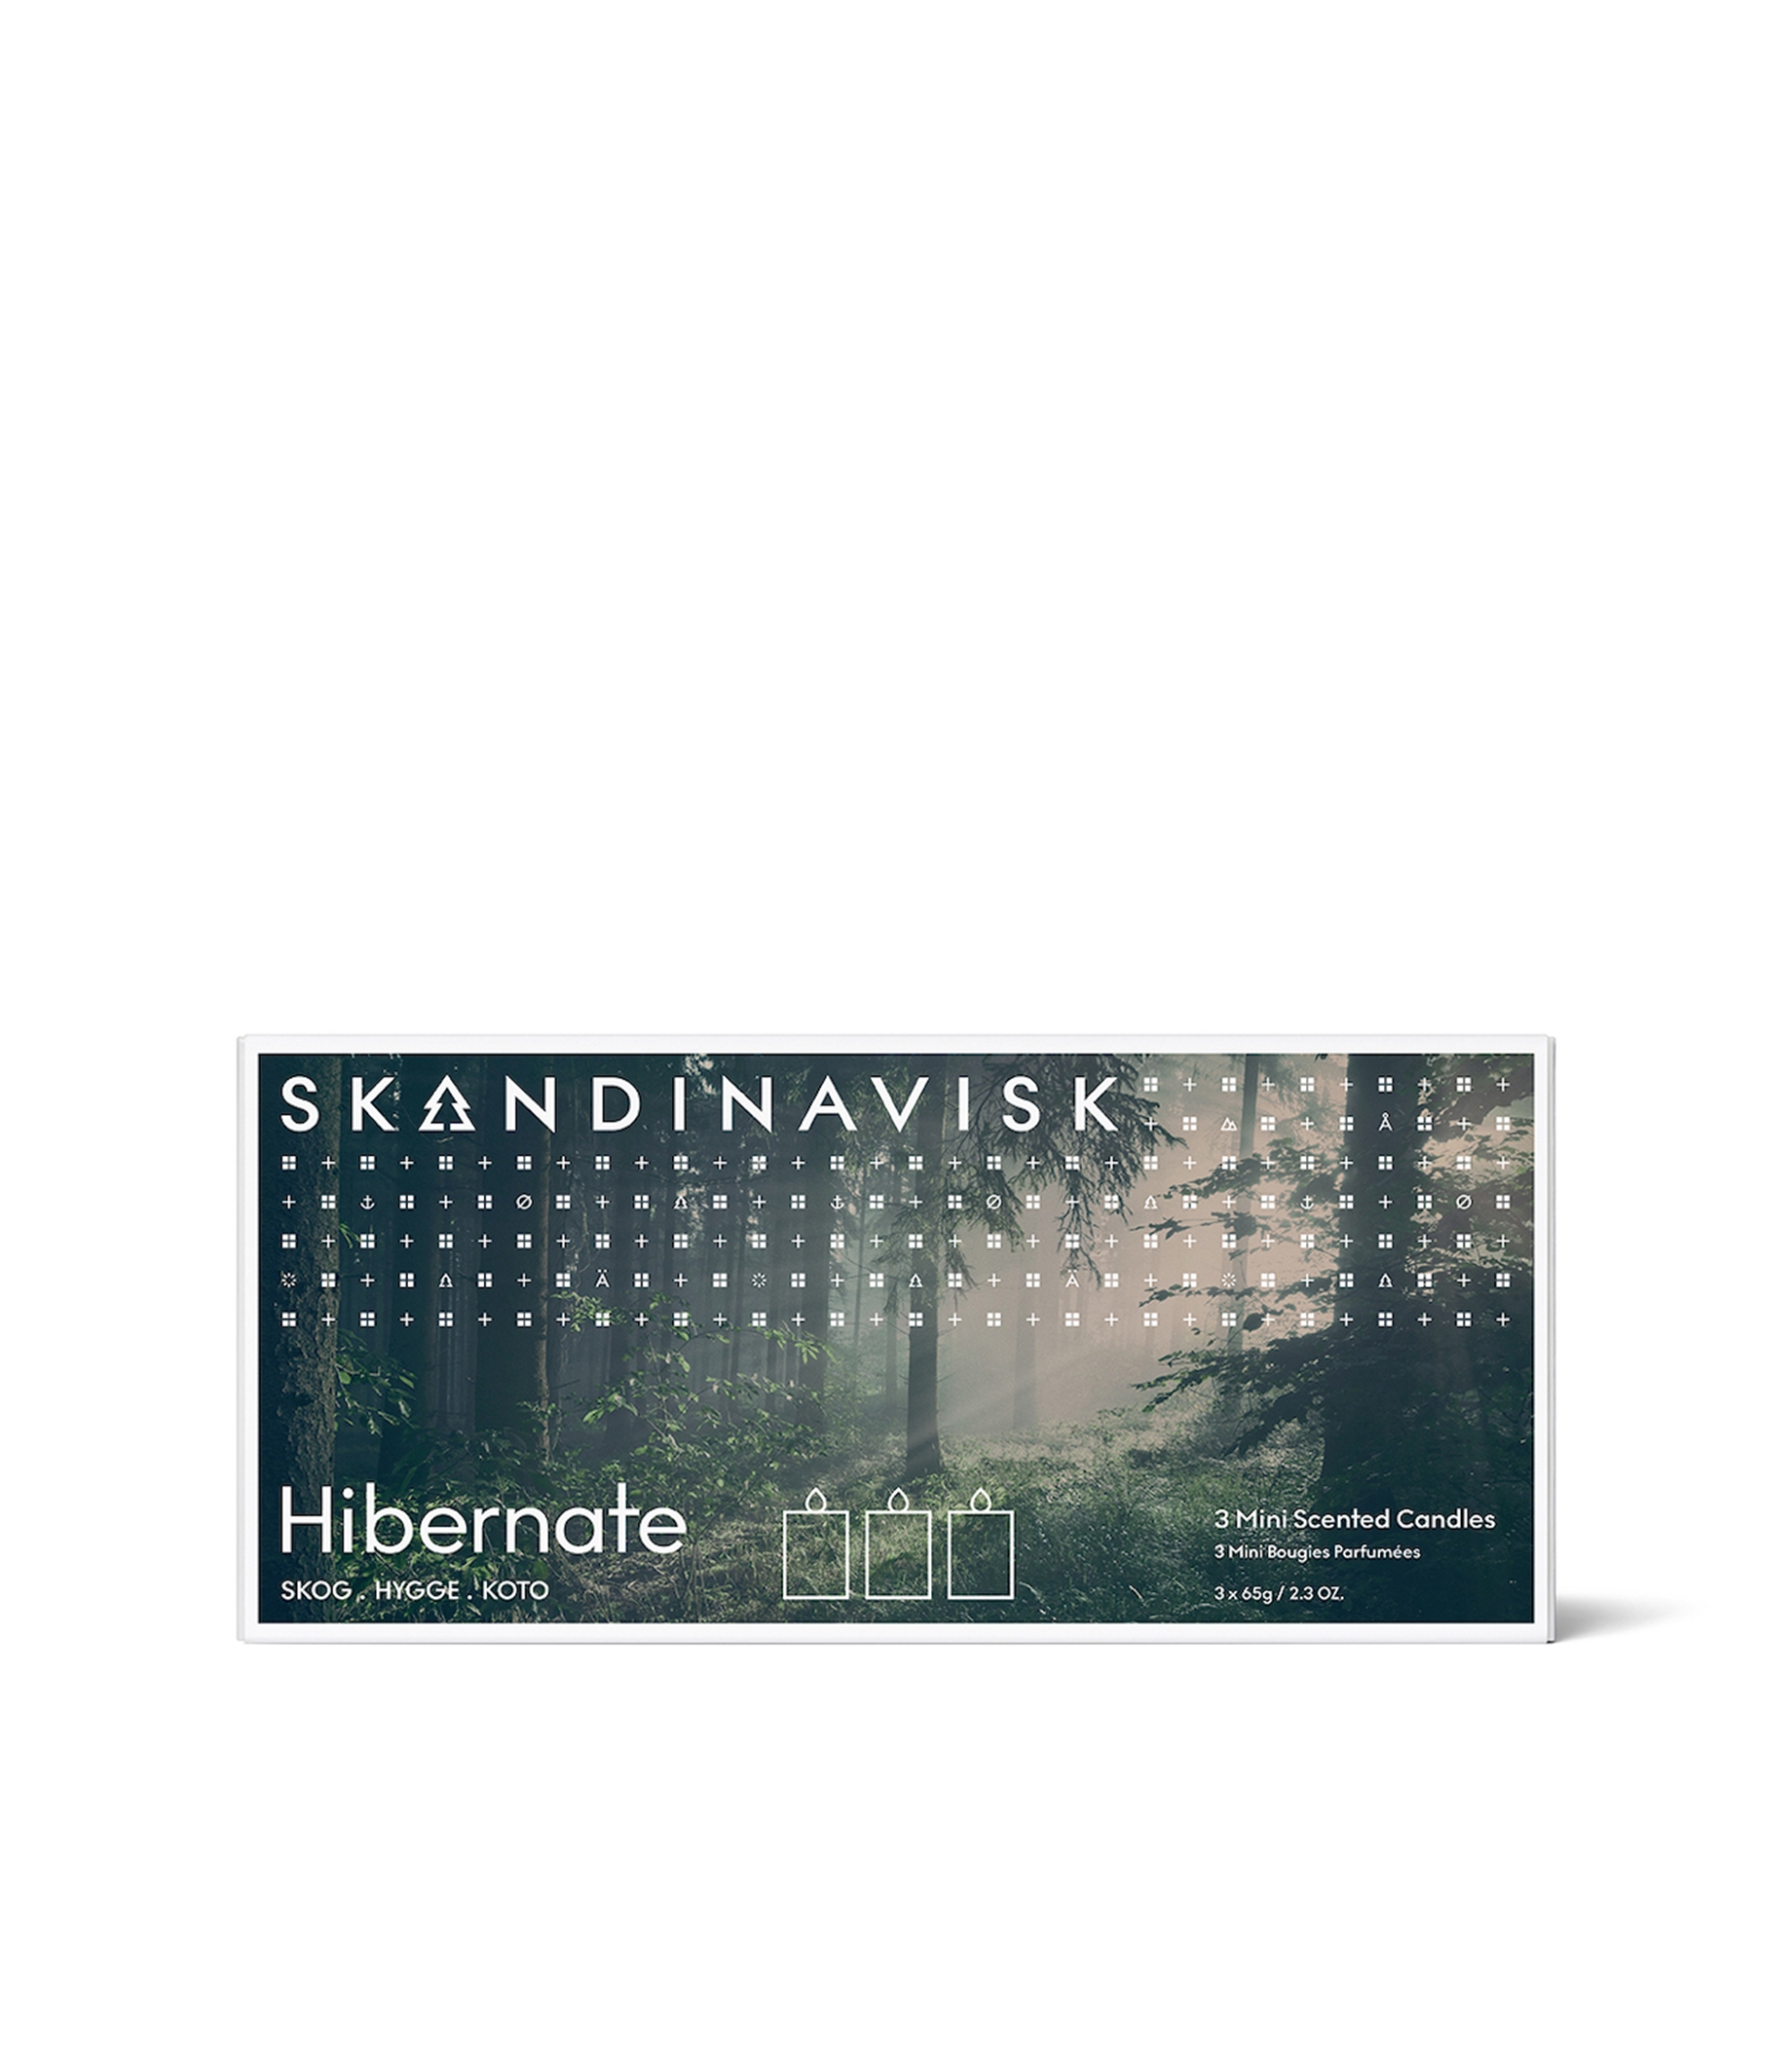 Skandinavisk-Hibernate-geurkaars-giftset-Skog-Hygge-Koto